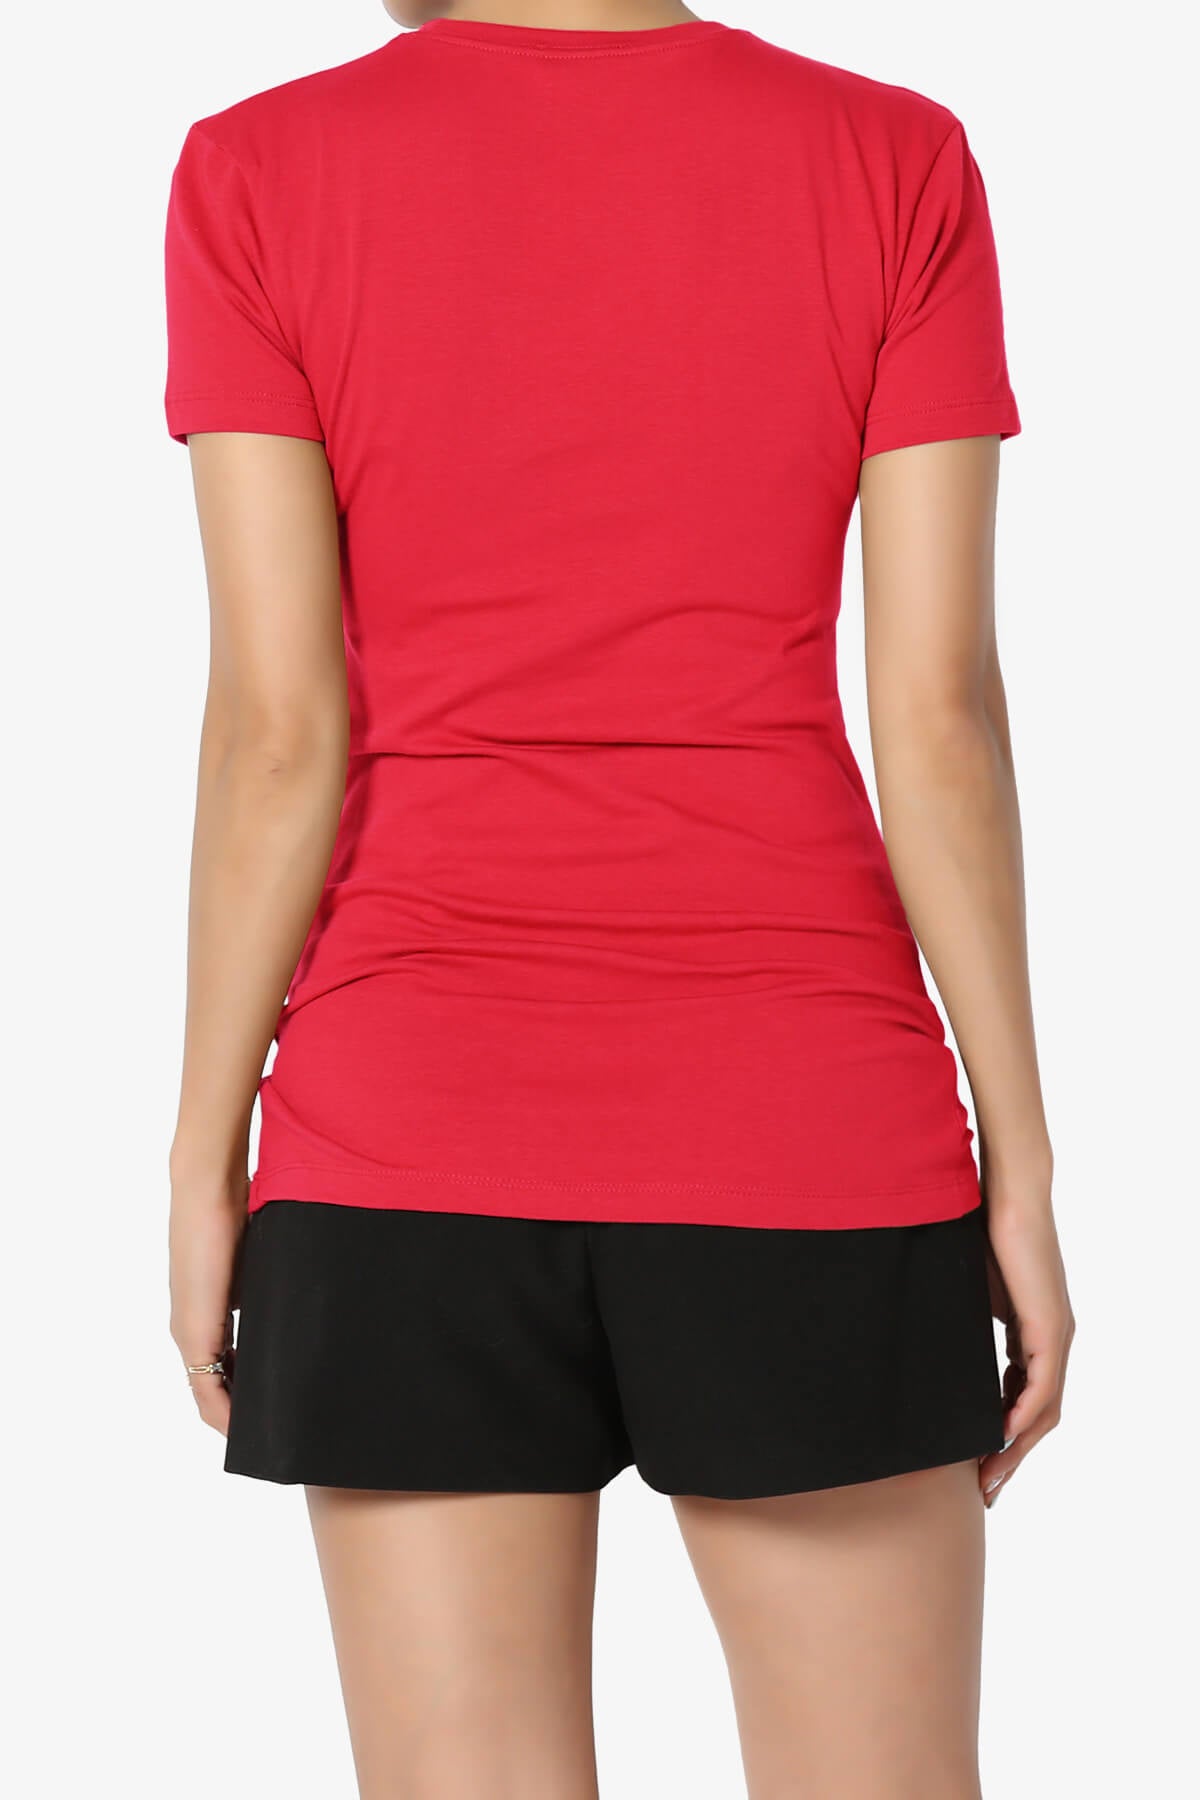 Candela Crew Neck Short Sleeve T-Shirts RED_2